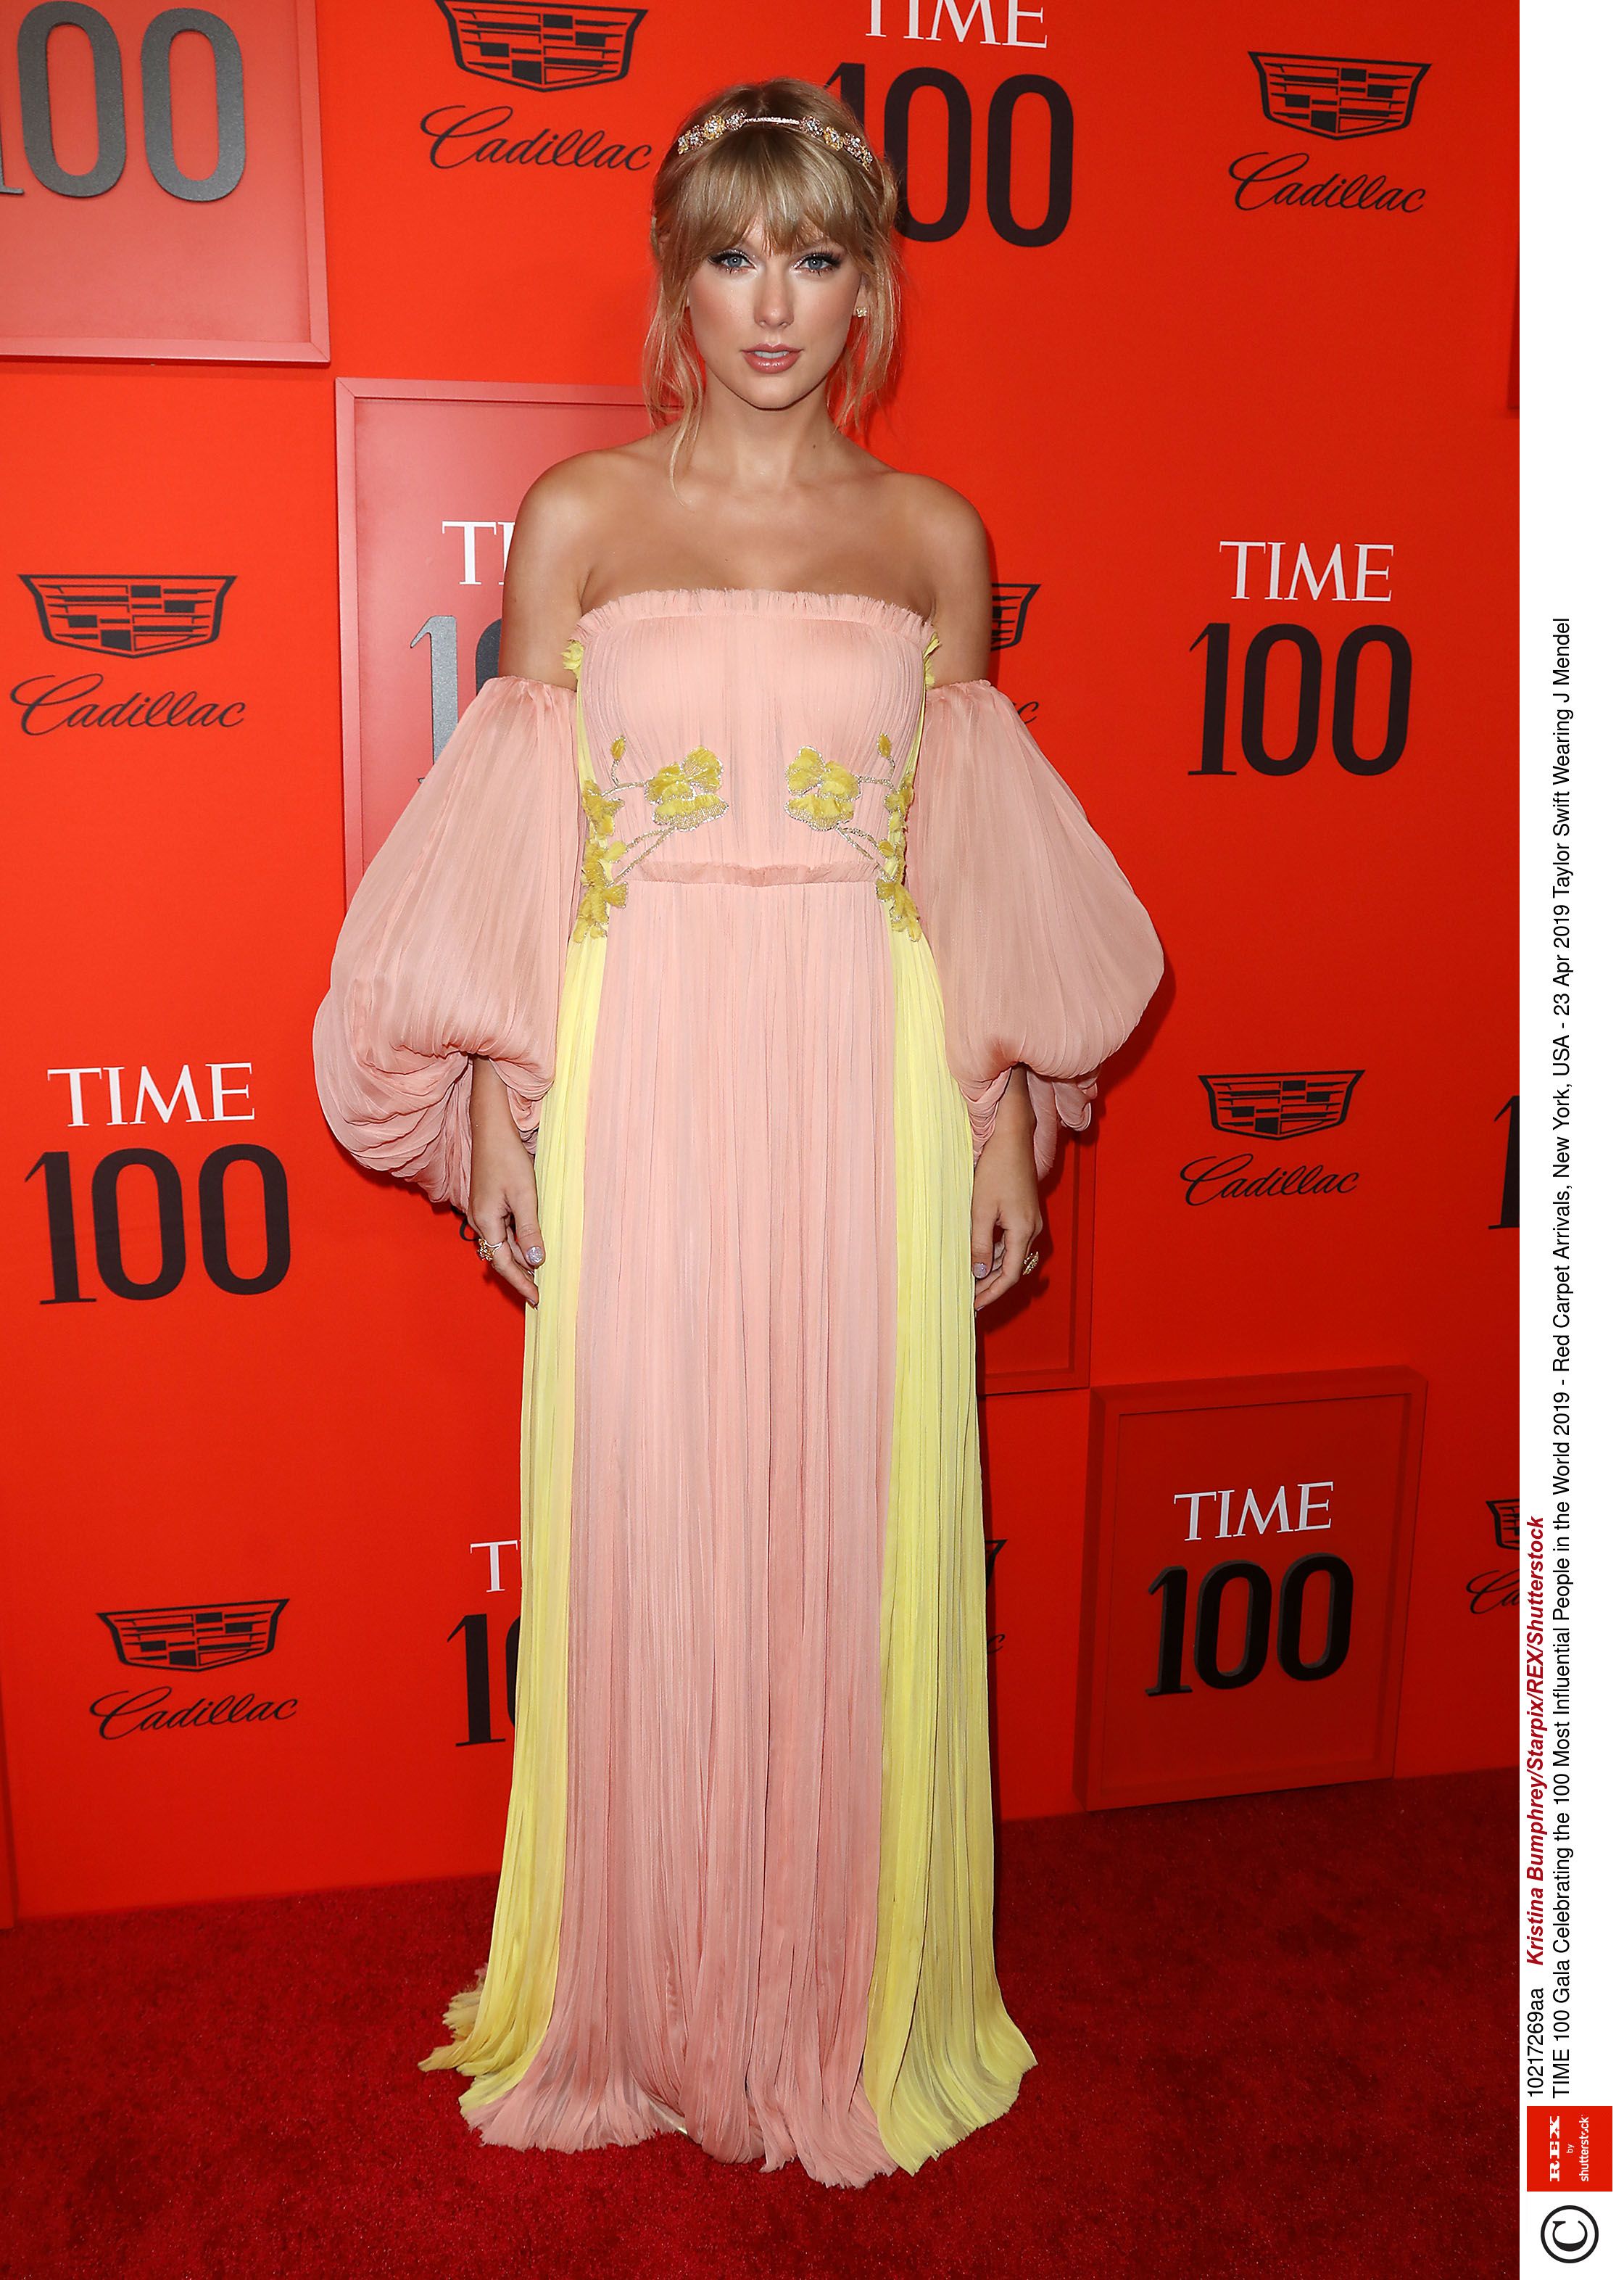 Grammys 2013: Taylor Swift Wears J. Mendel Gown, Heidi Hair (Poll)